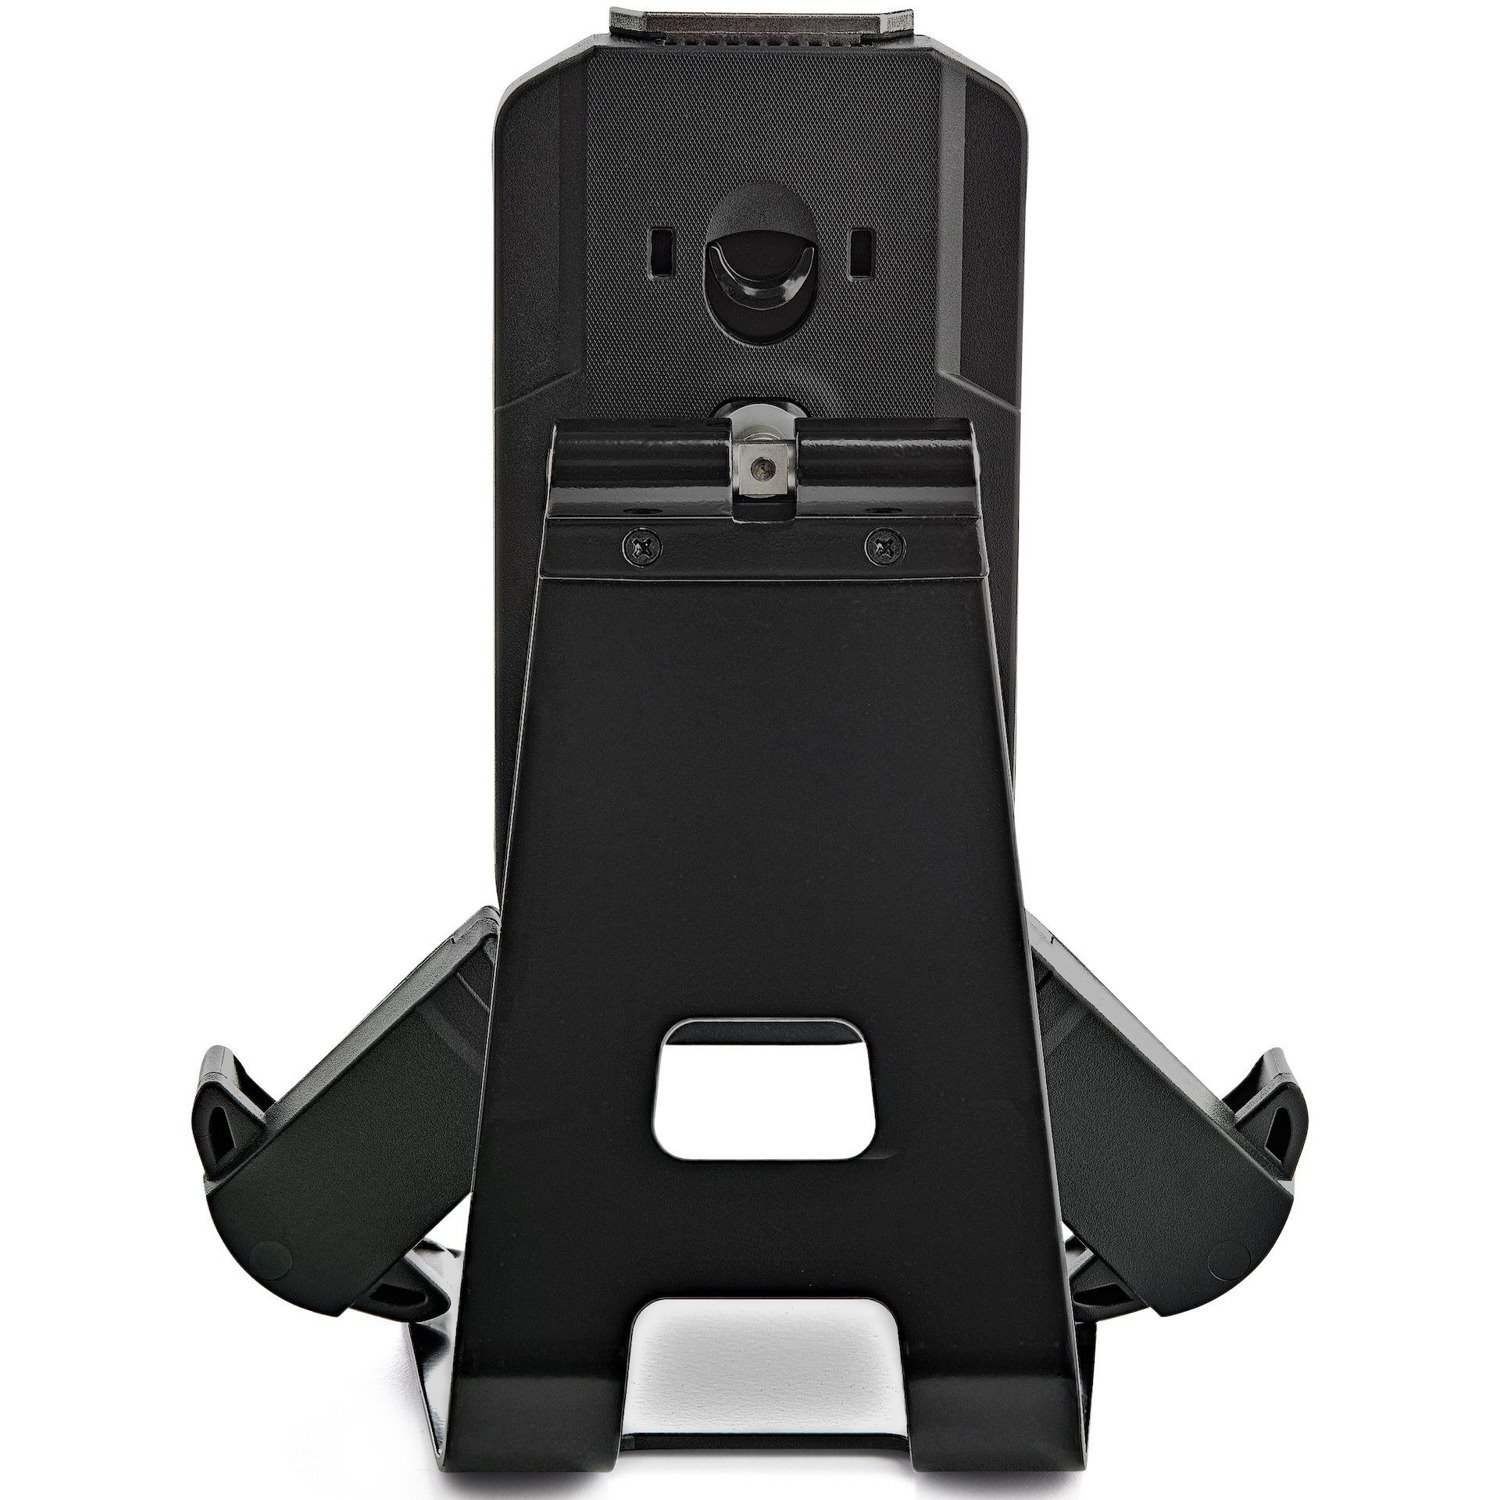 StarTech.com Secure Tablet Stand with K-Slot Cable Lock, Locking Universal Holder for 7.9"-13" Tablets, Adjustable, Security Tablet Mount